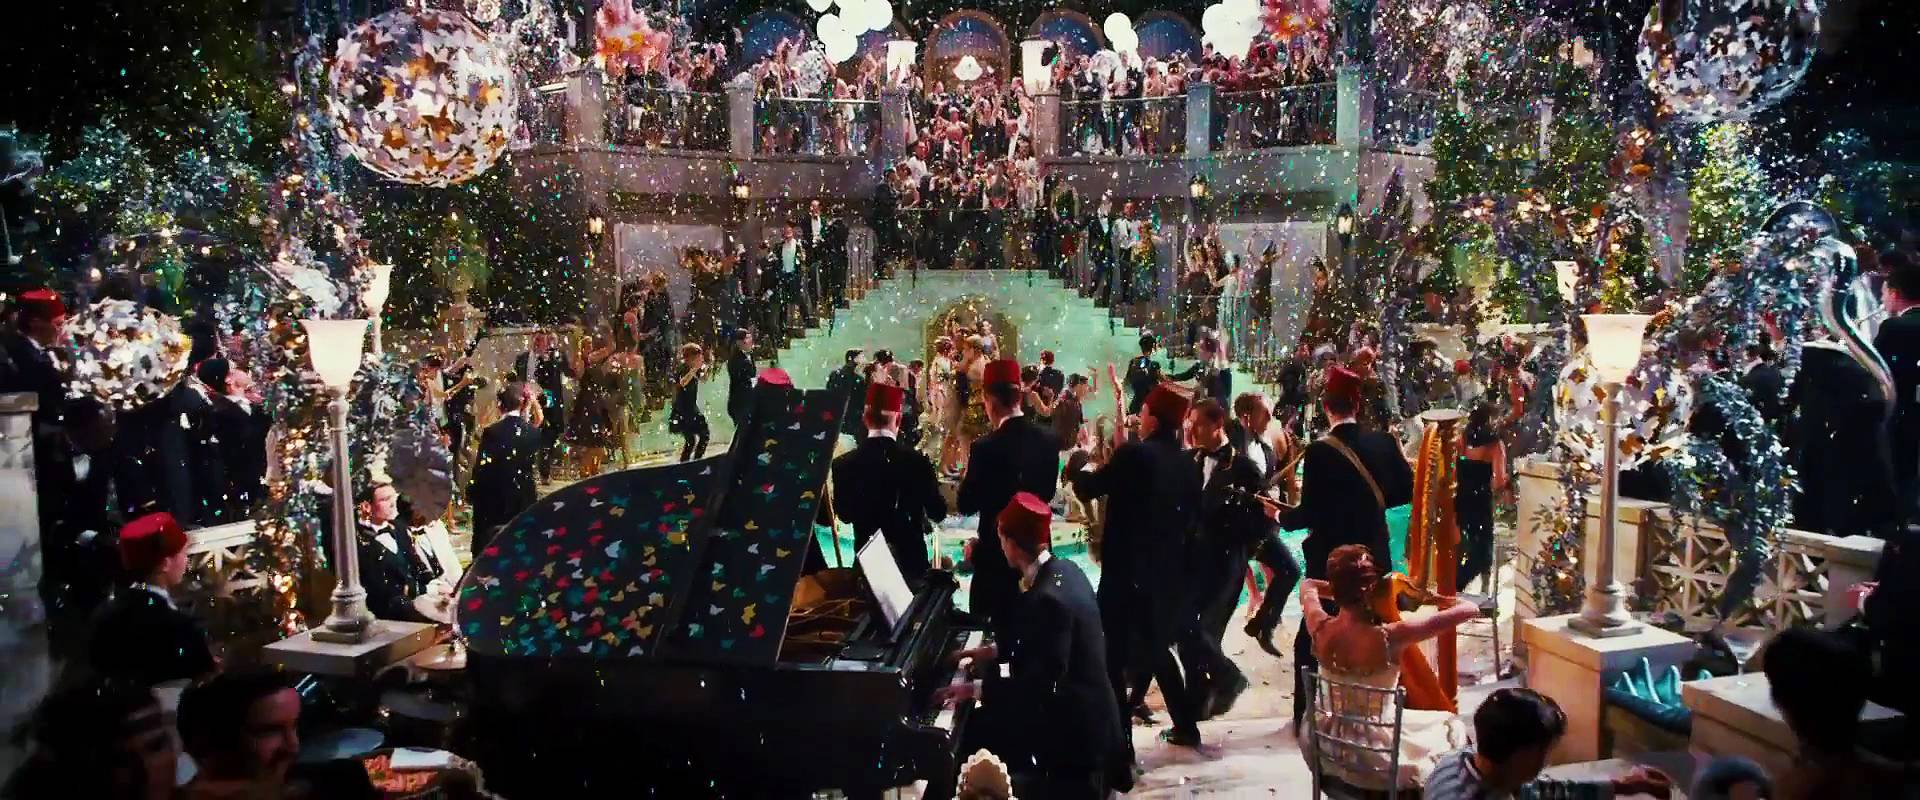 gatsby party2.jpg